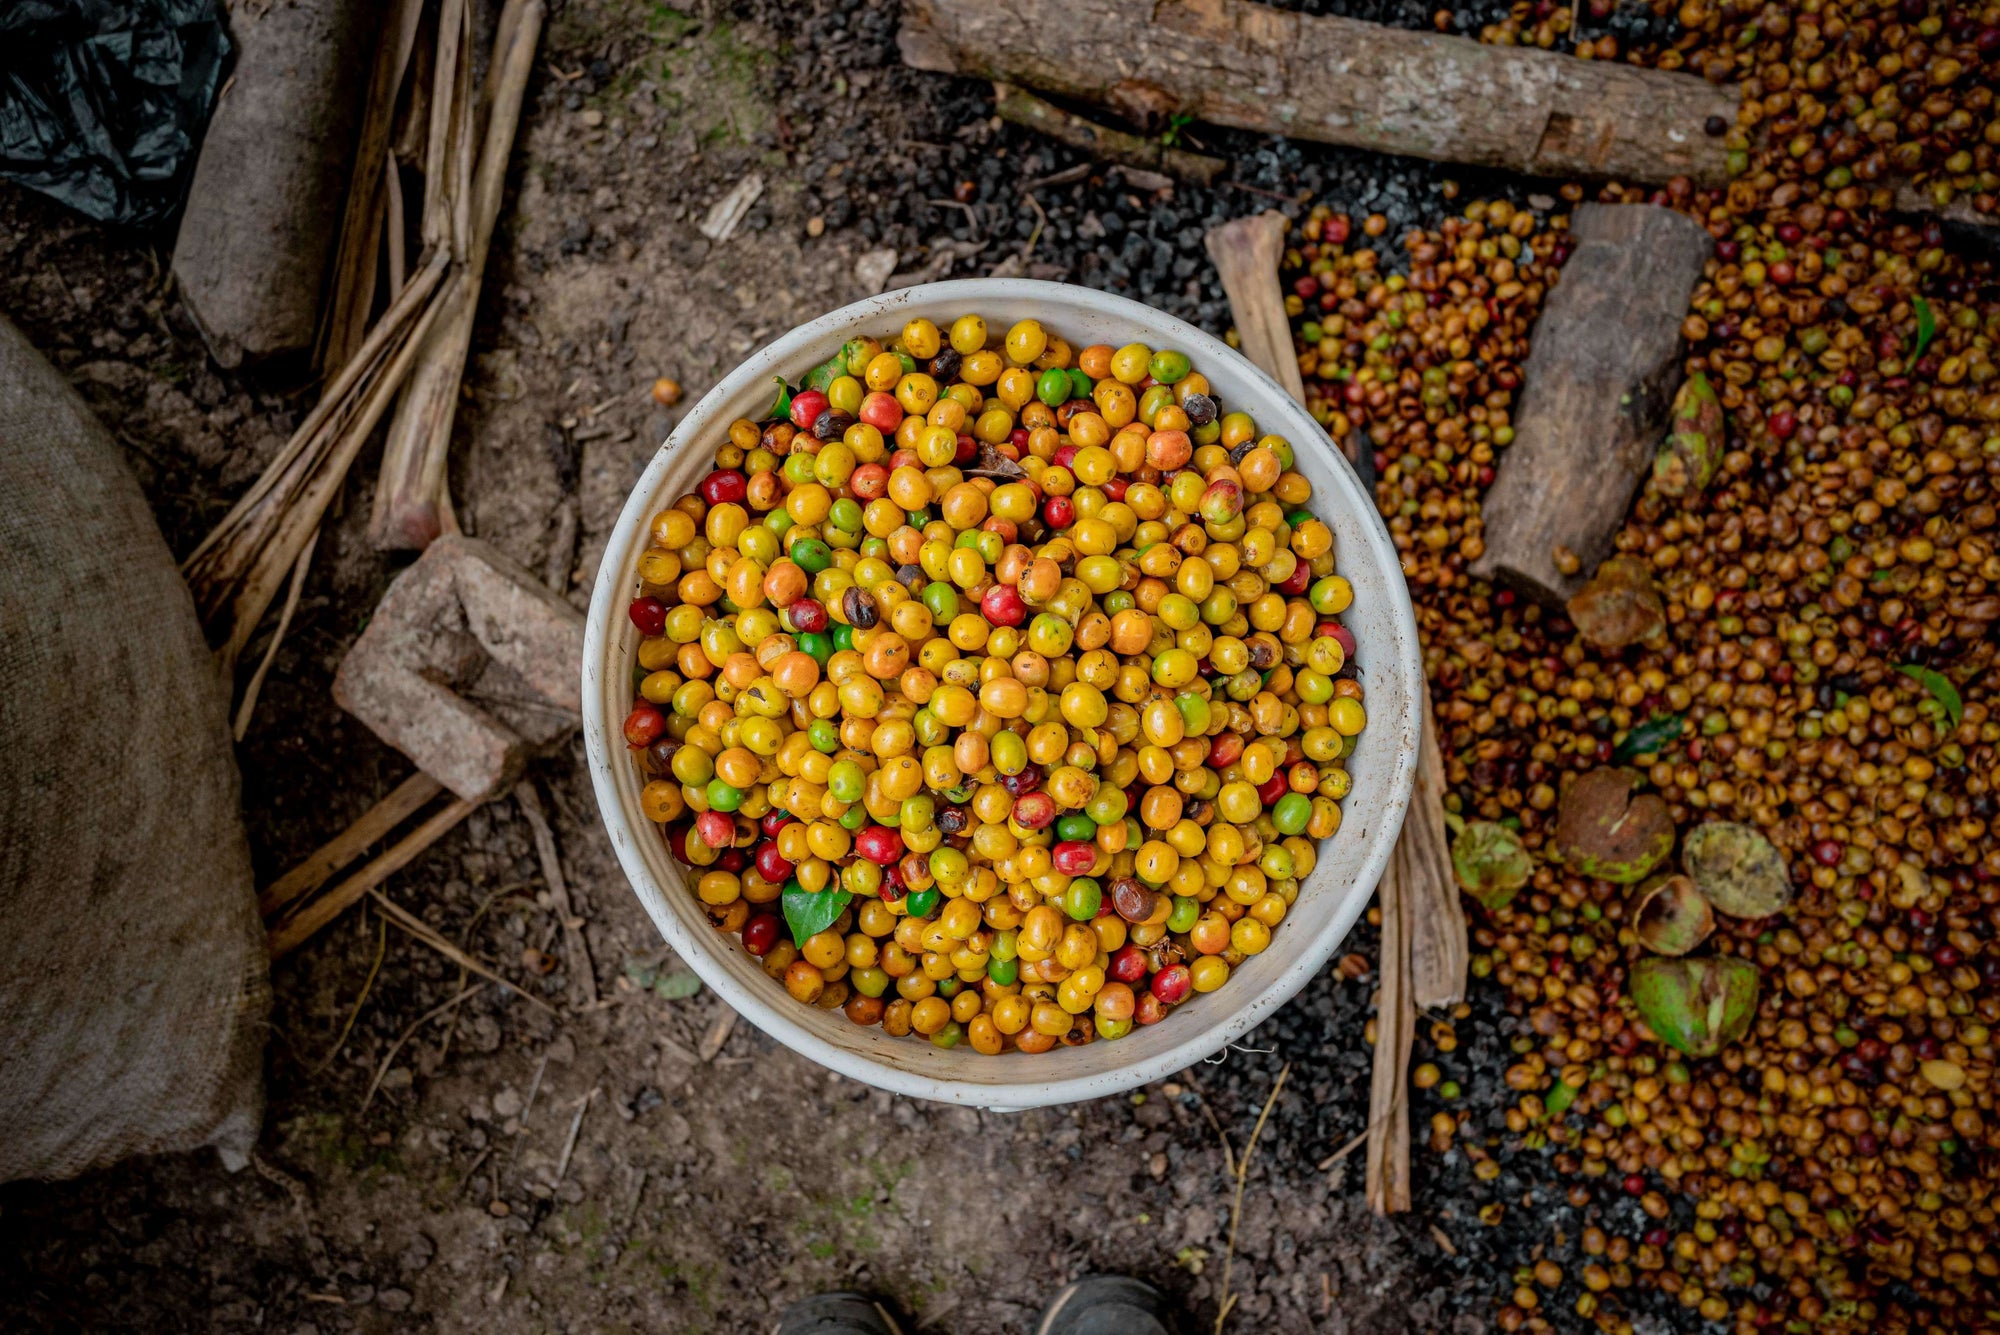 Peruvian Coffee Harvest Guide 2022/23